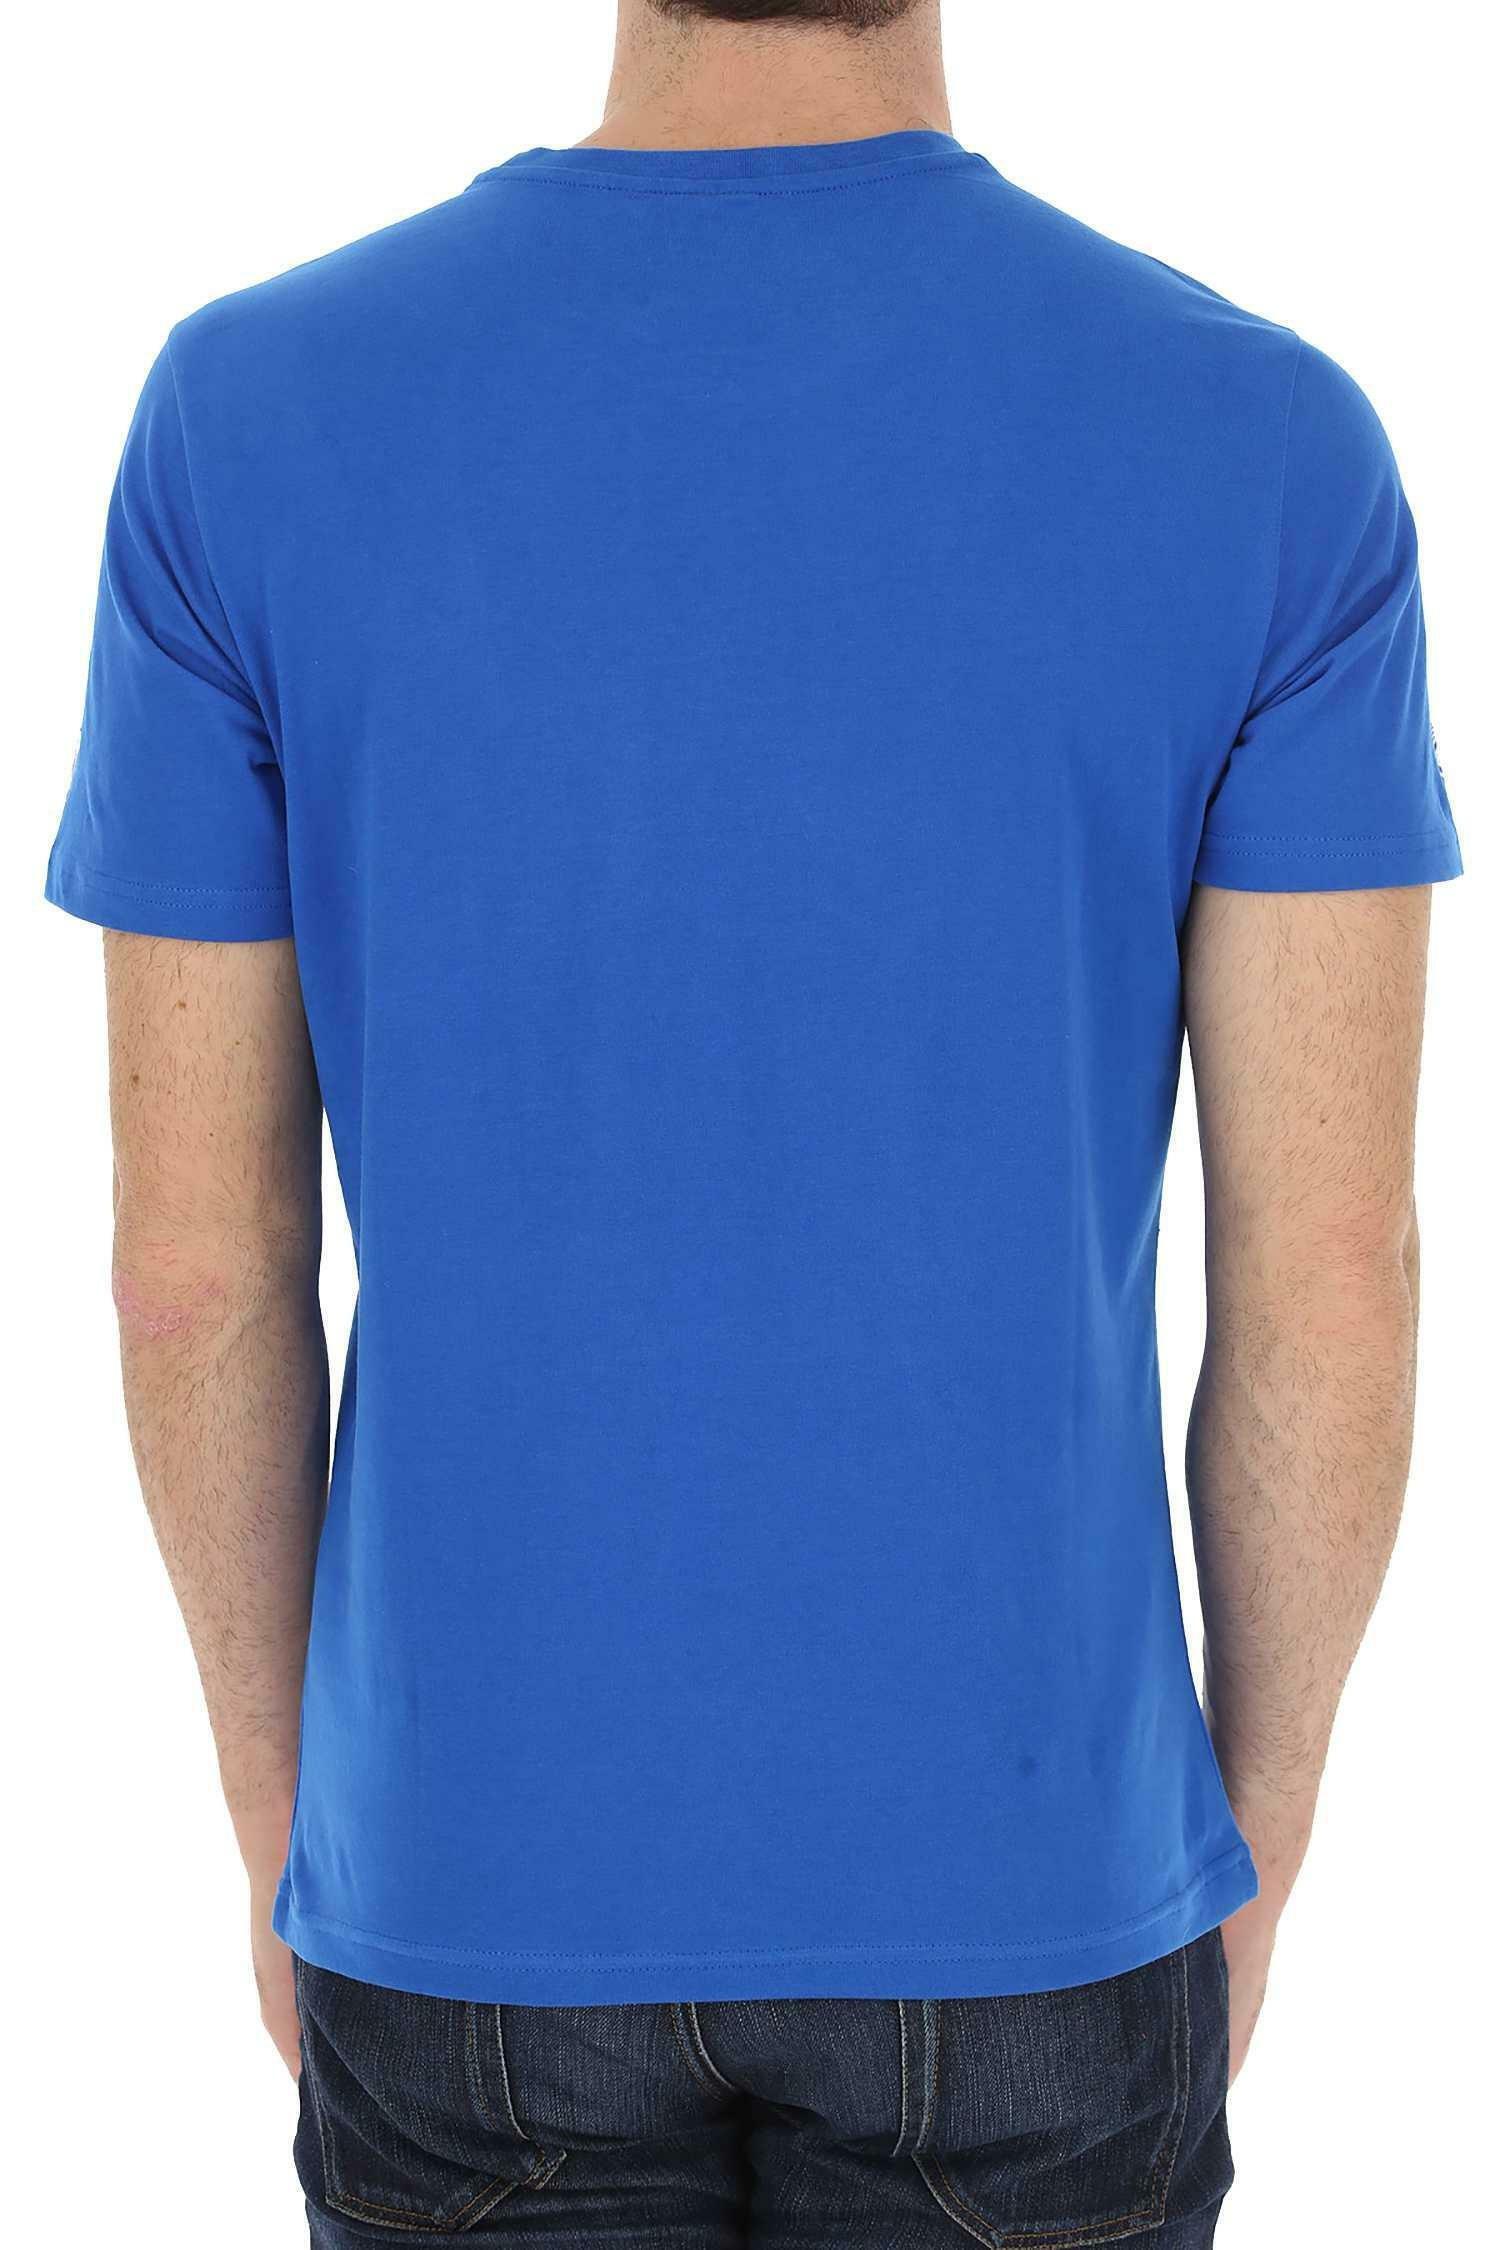 sergio tacchini sergio tacchini irune t-shirt uomo blu 37779274rn